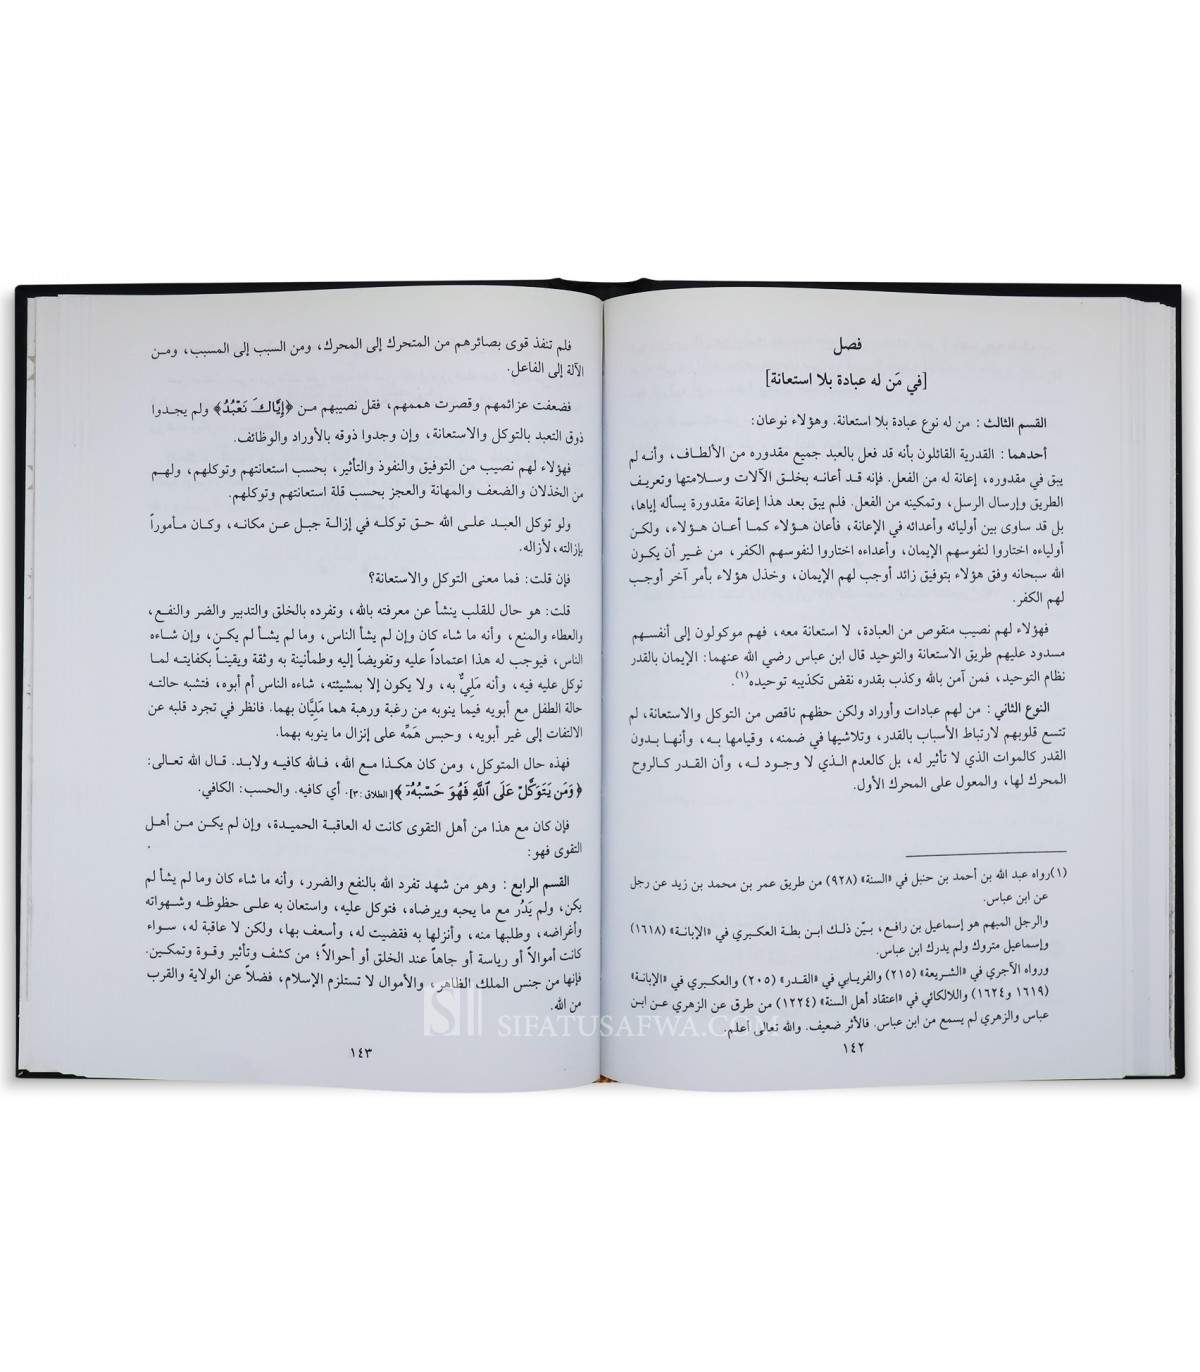 Tafsir Sura Al Fatiha According To The Writings Of Ibn Al Qayyim